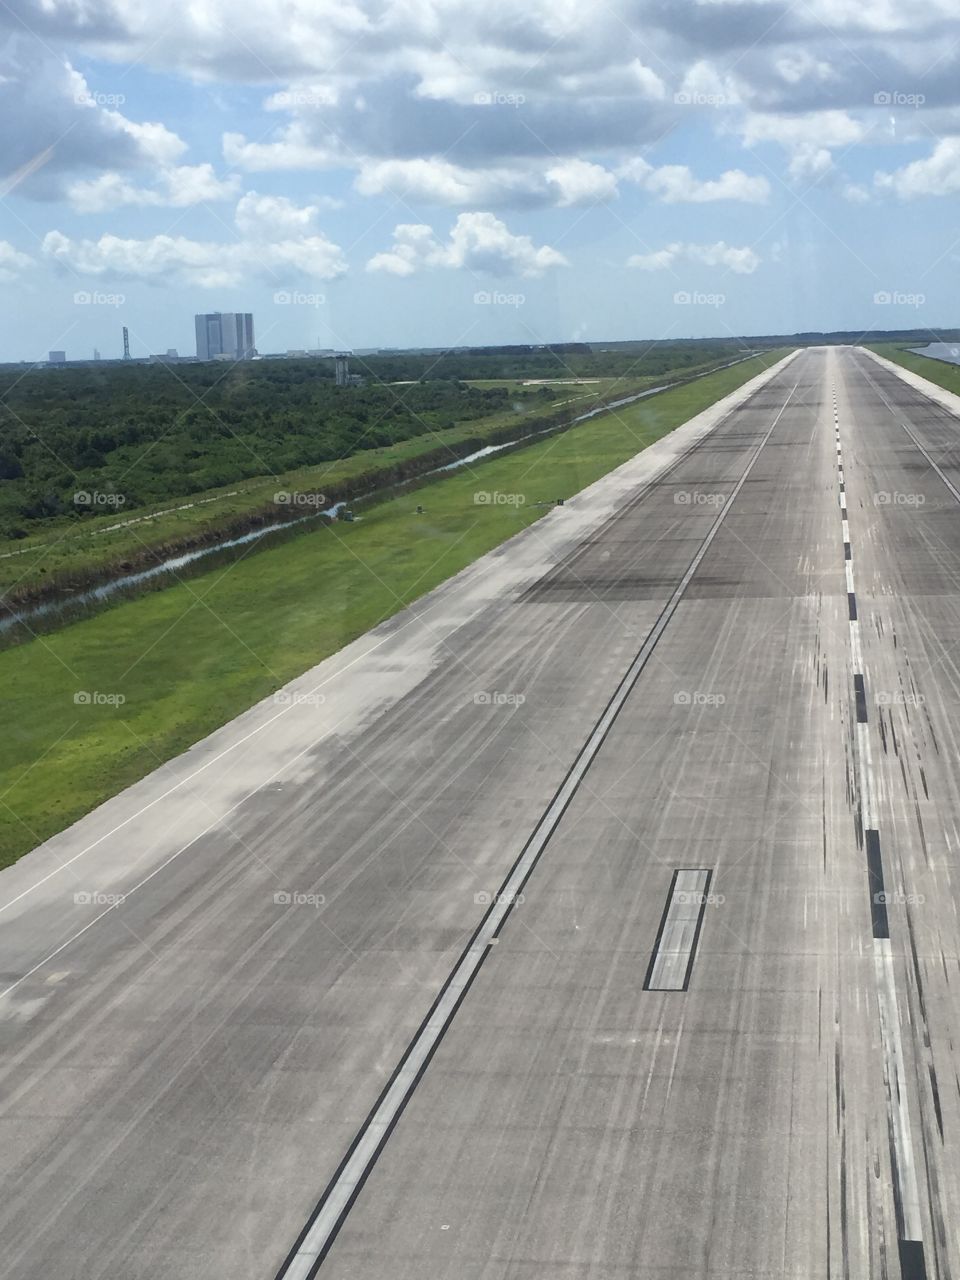 Space shuttle runway at NASA Cape Canaveral 